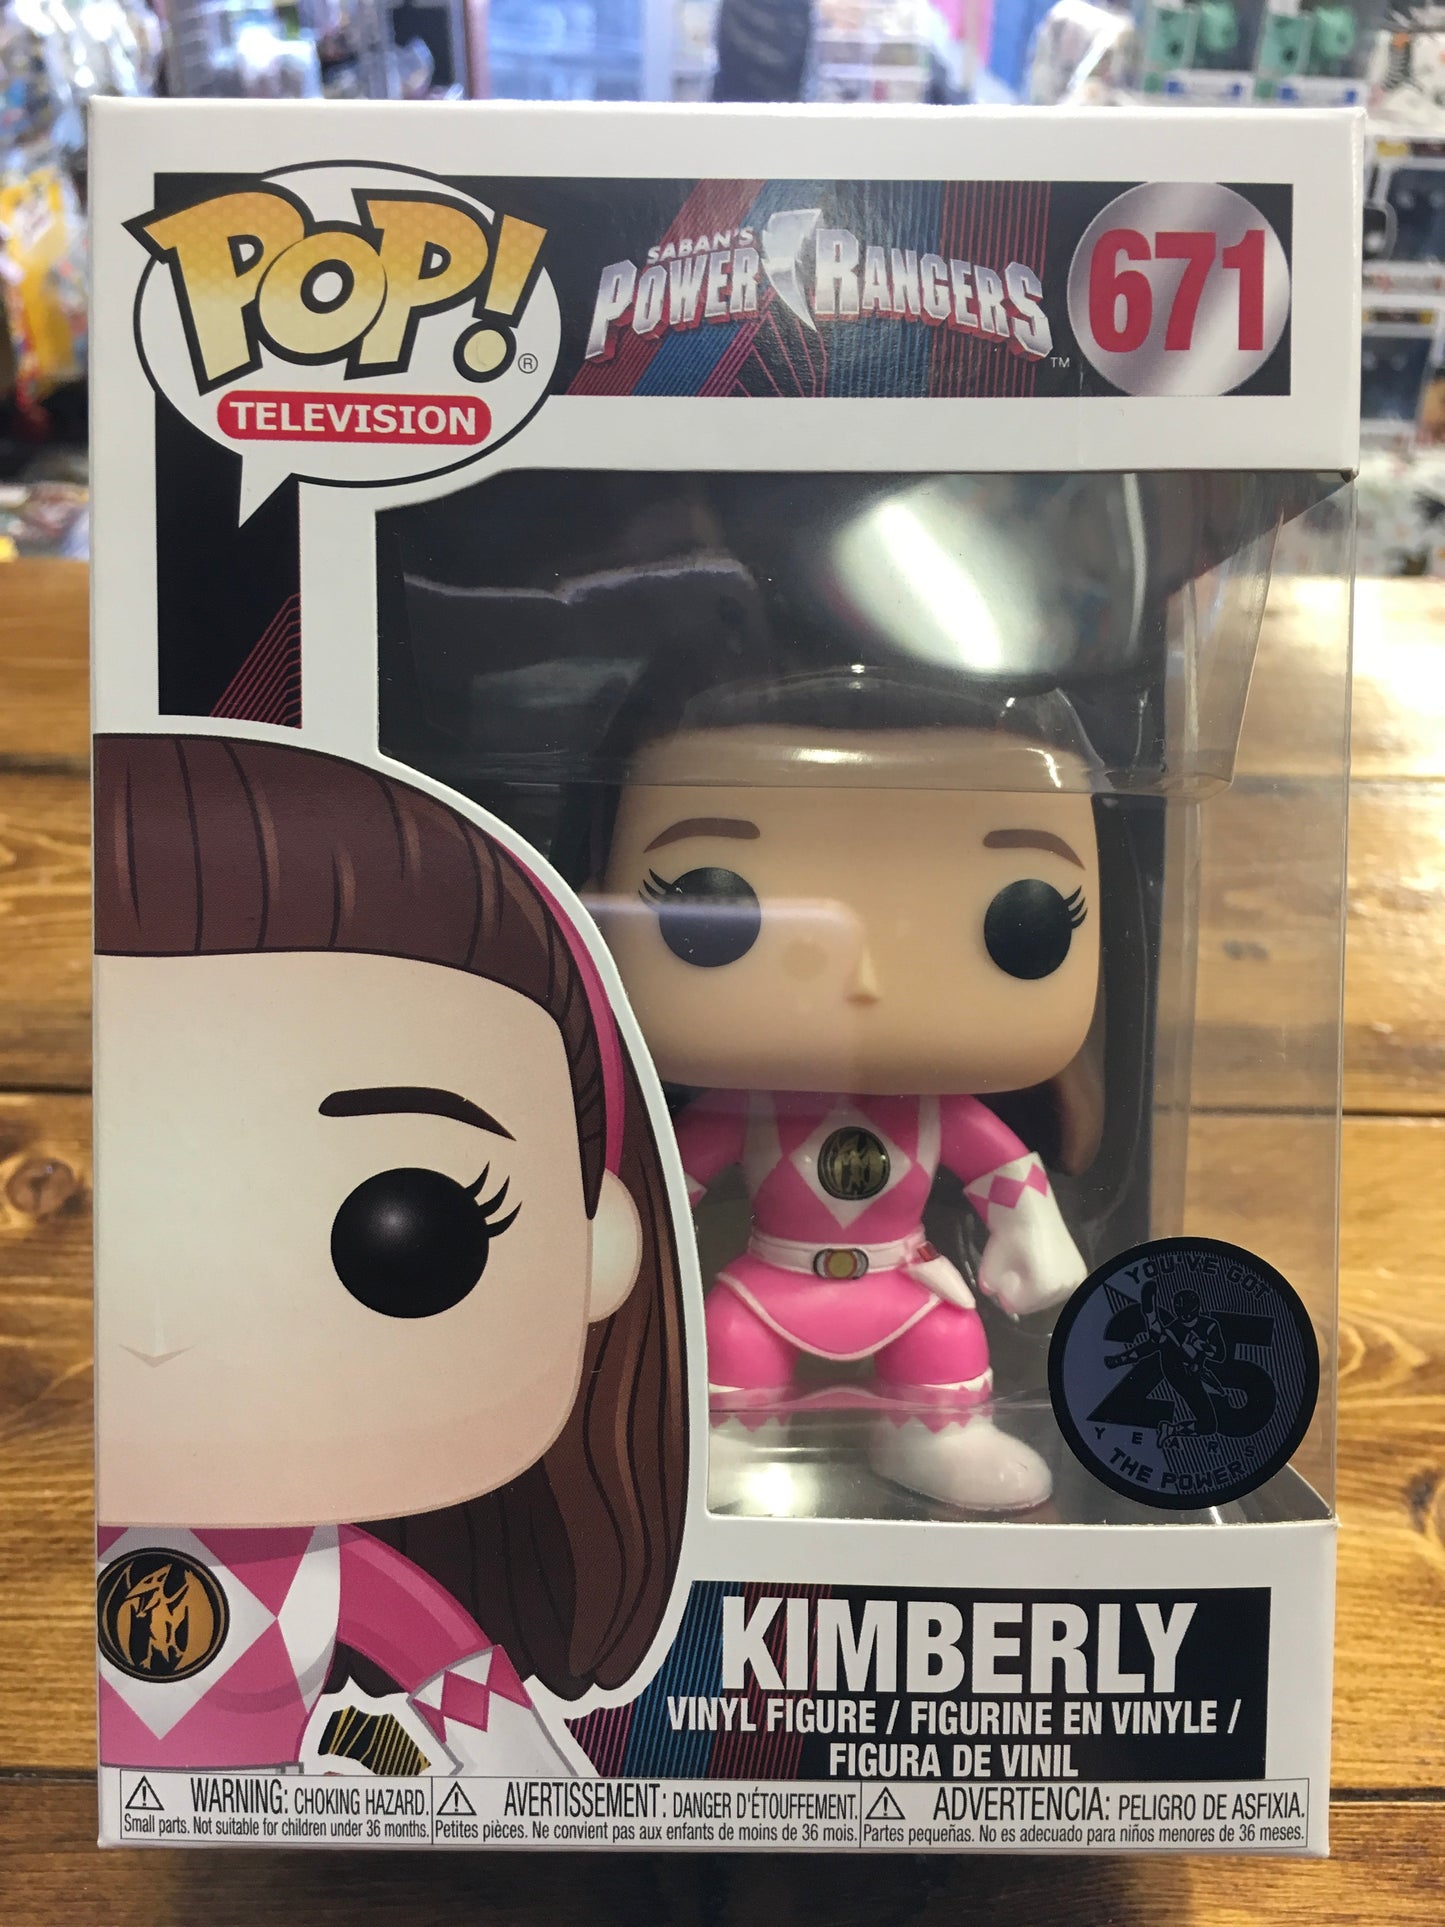 Power Rangers Kimberly #671 Television Funko Pop! Vinyl Figure